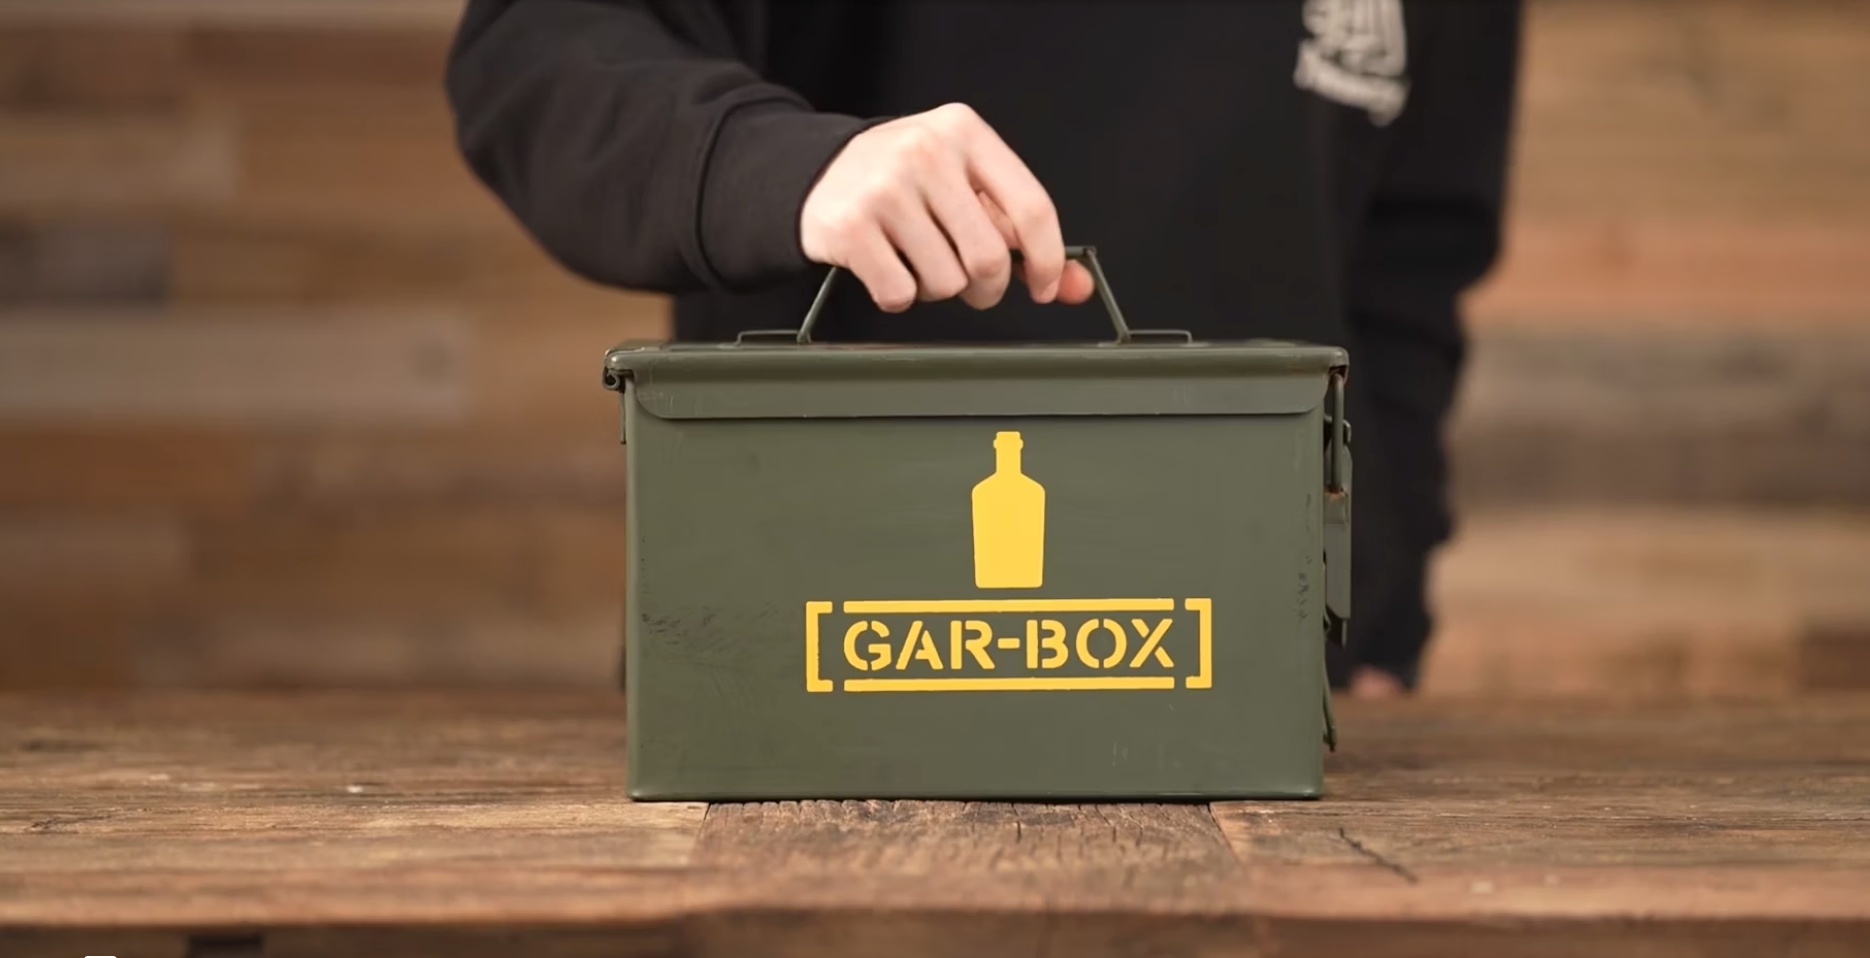 Load video: gar box